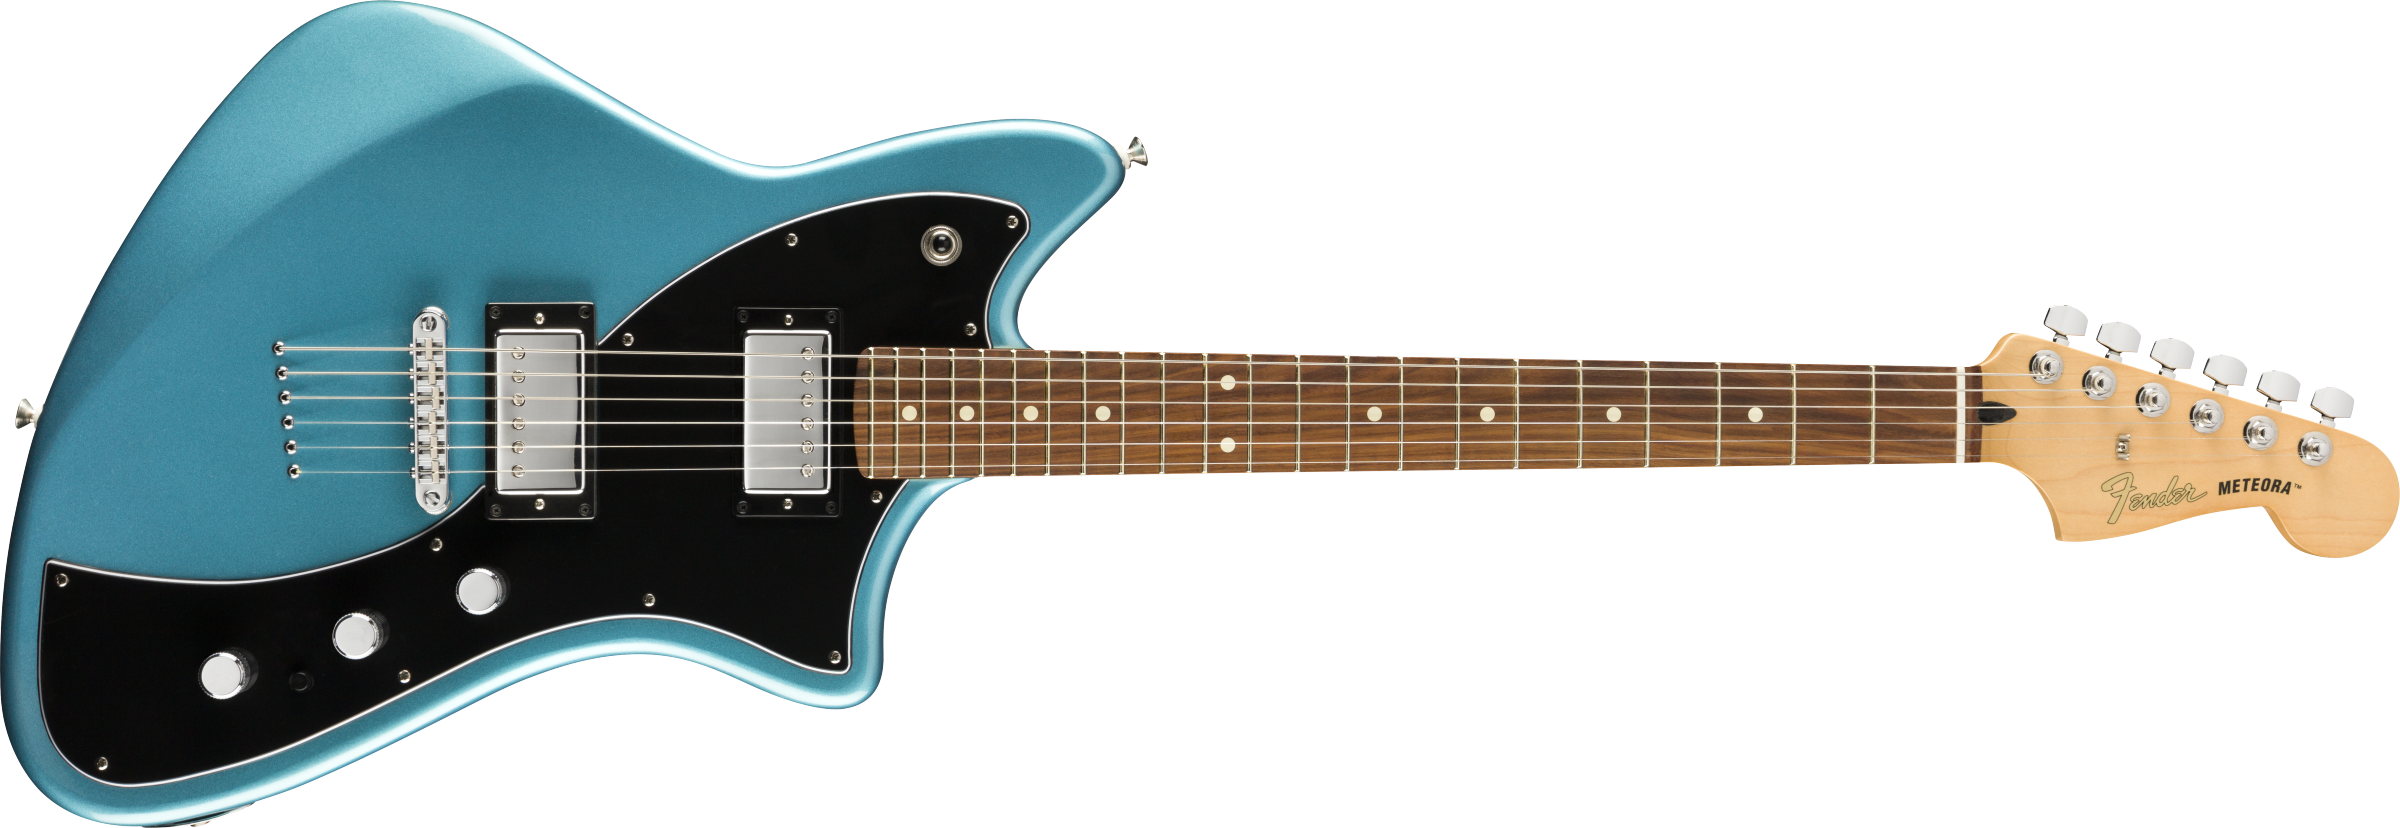 Fender® Meteora®, Pau Ferro Fingerboard, Lake Placid Blue